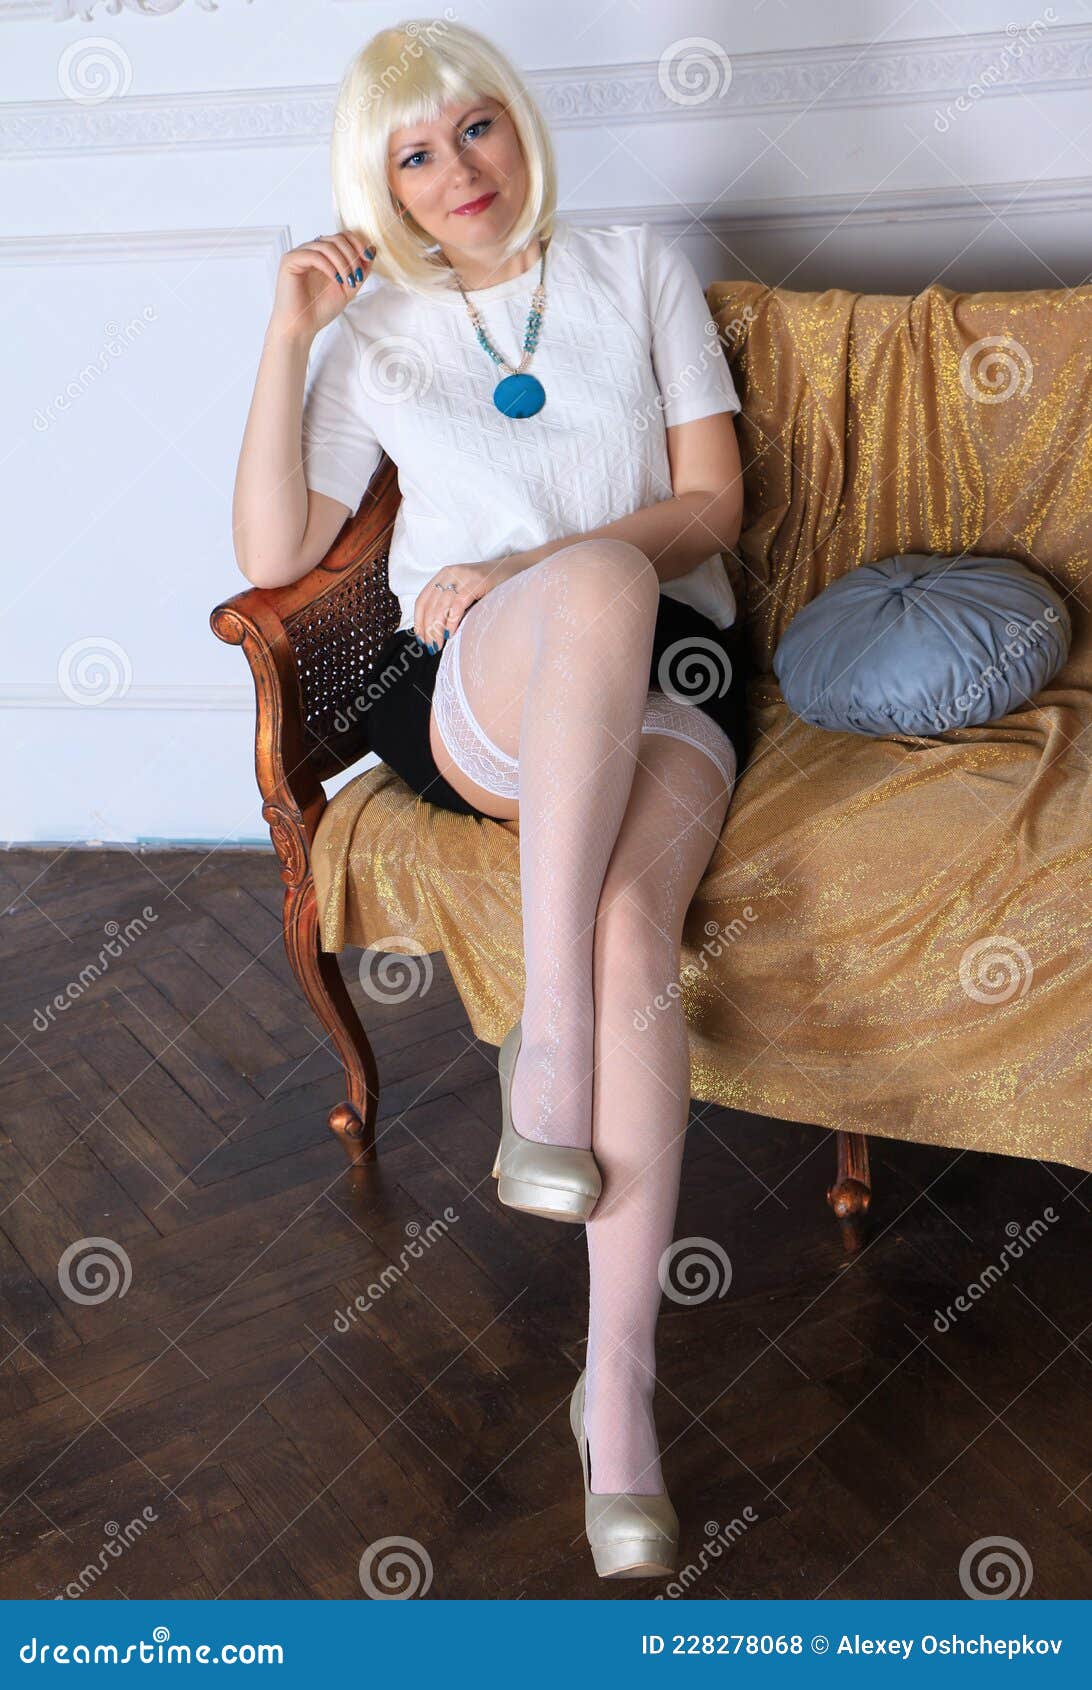 asif niazi add woman with white stockings photo